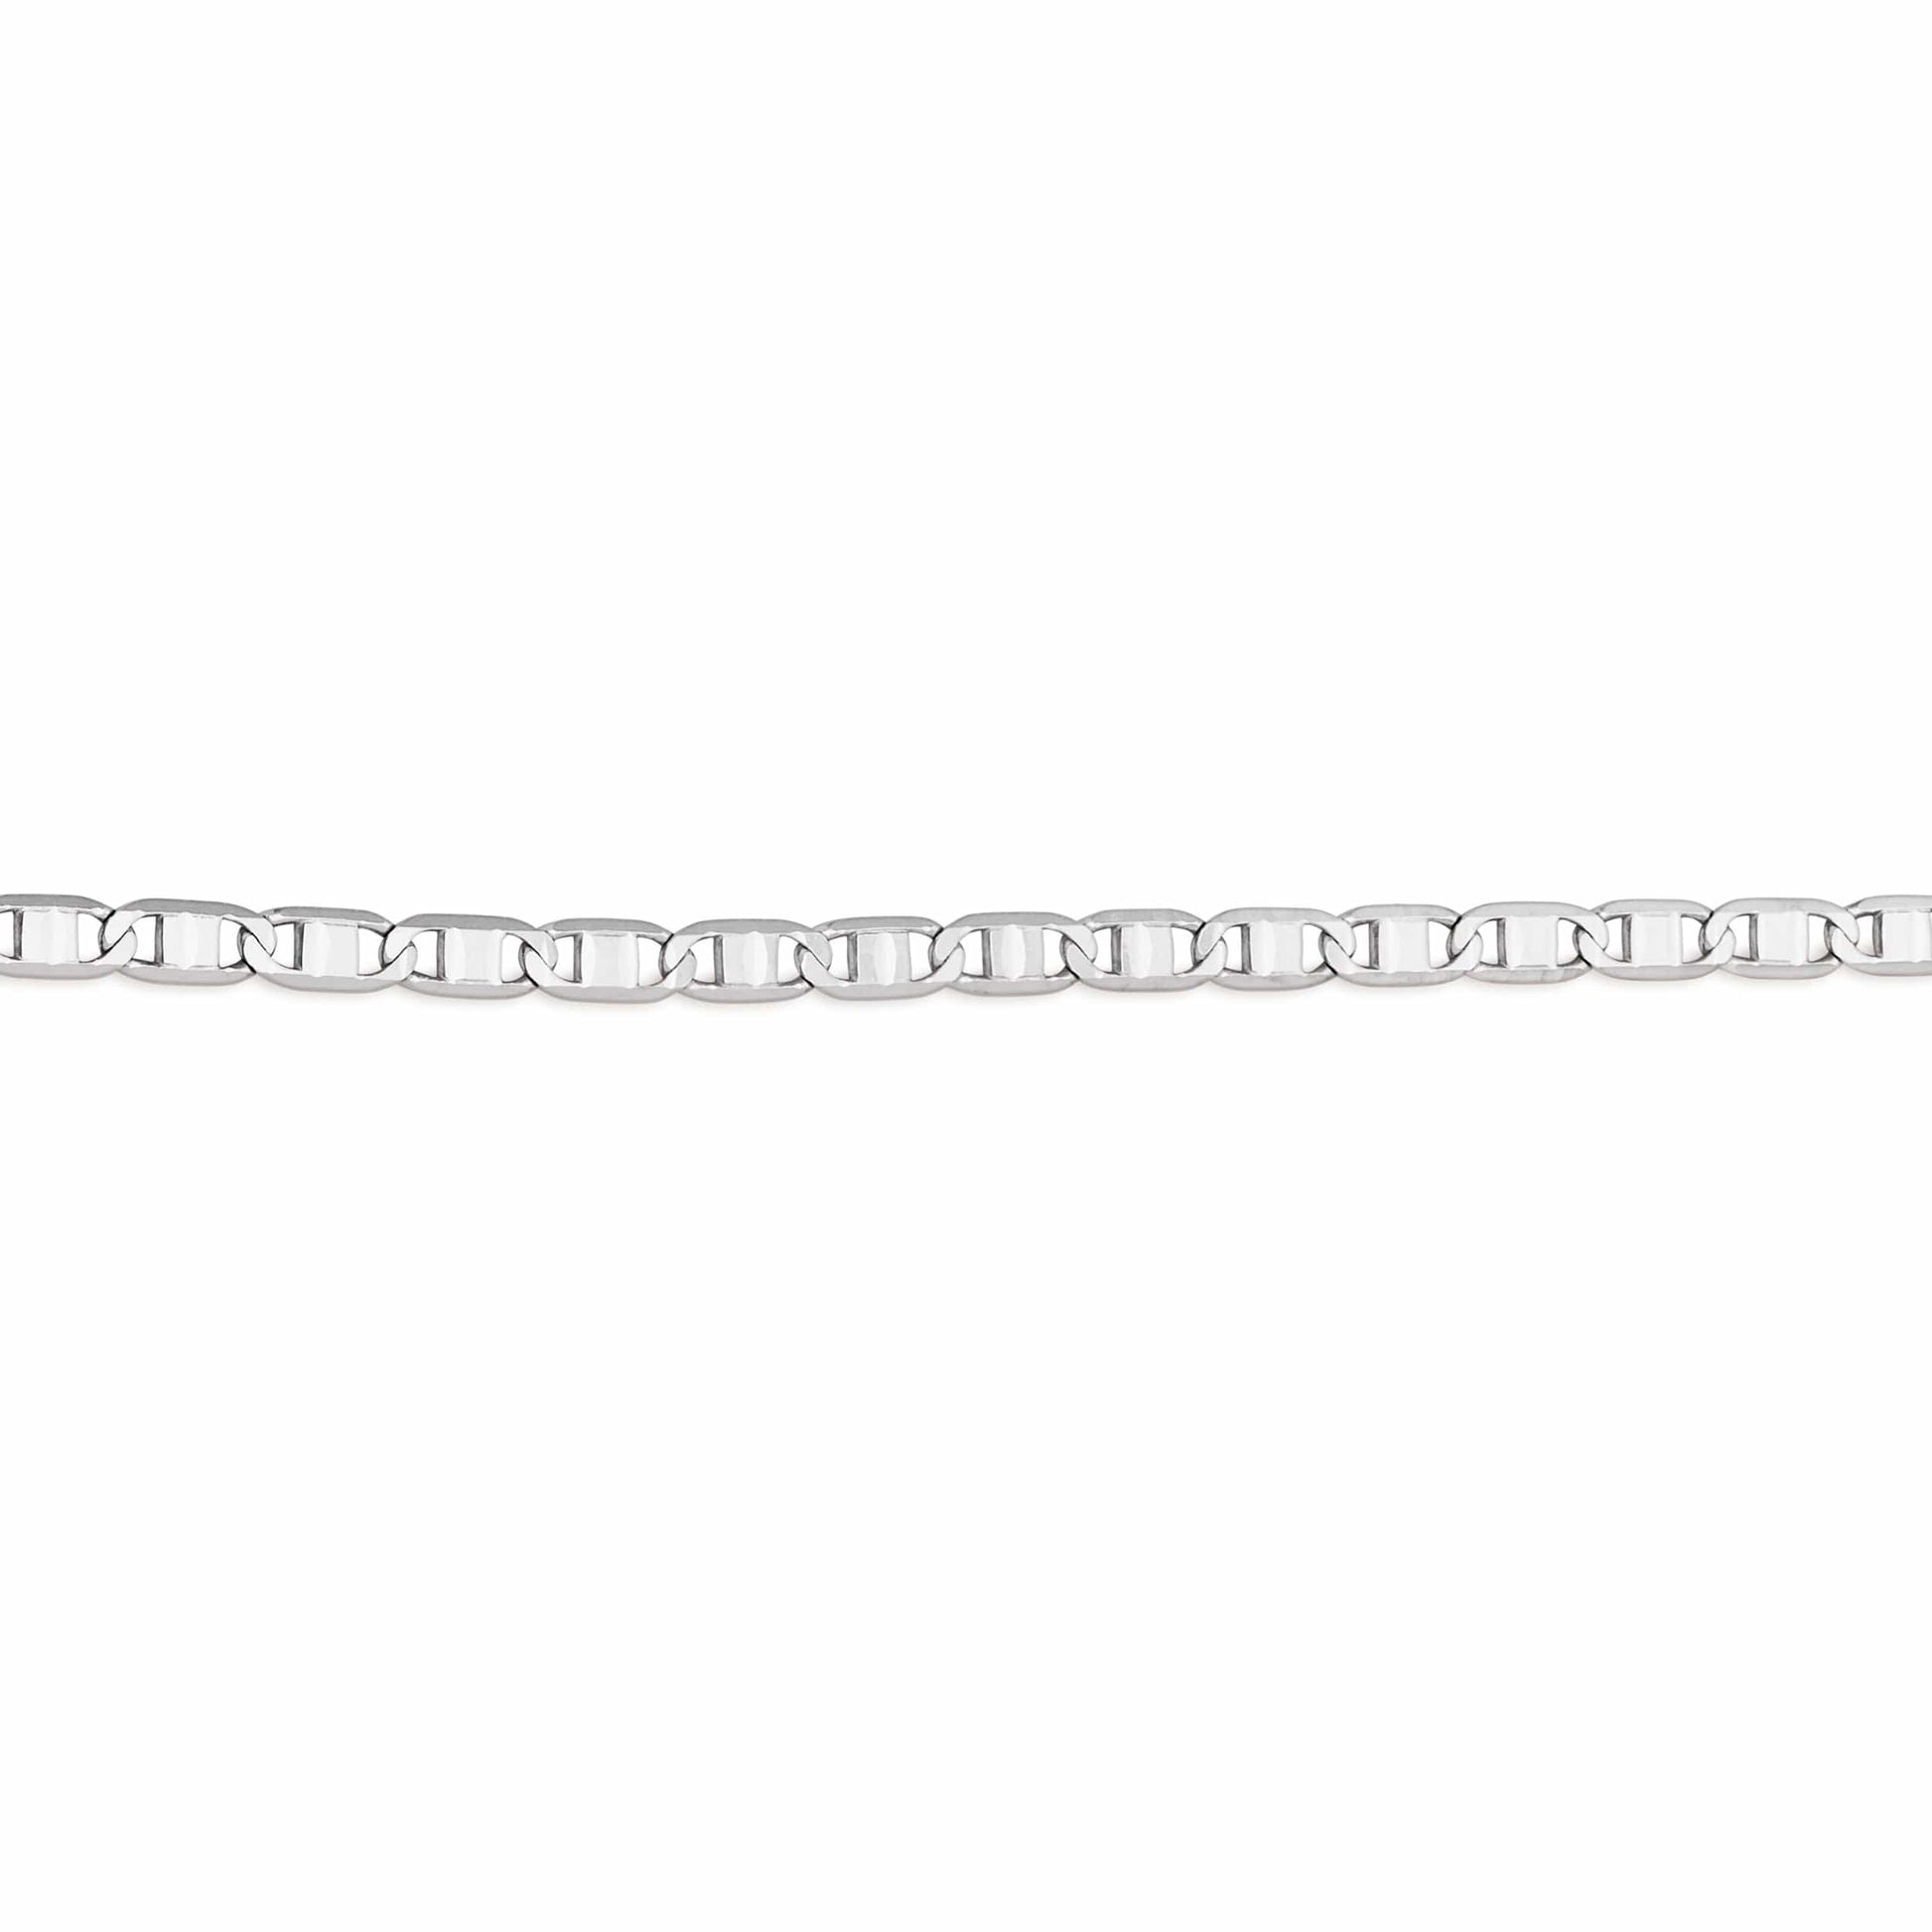 MONDO CATTOLICO Jewelry Cm 60 (23.6 in) White Gold Curb London Chain